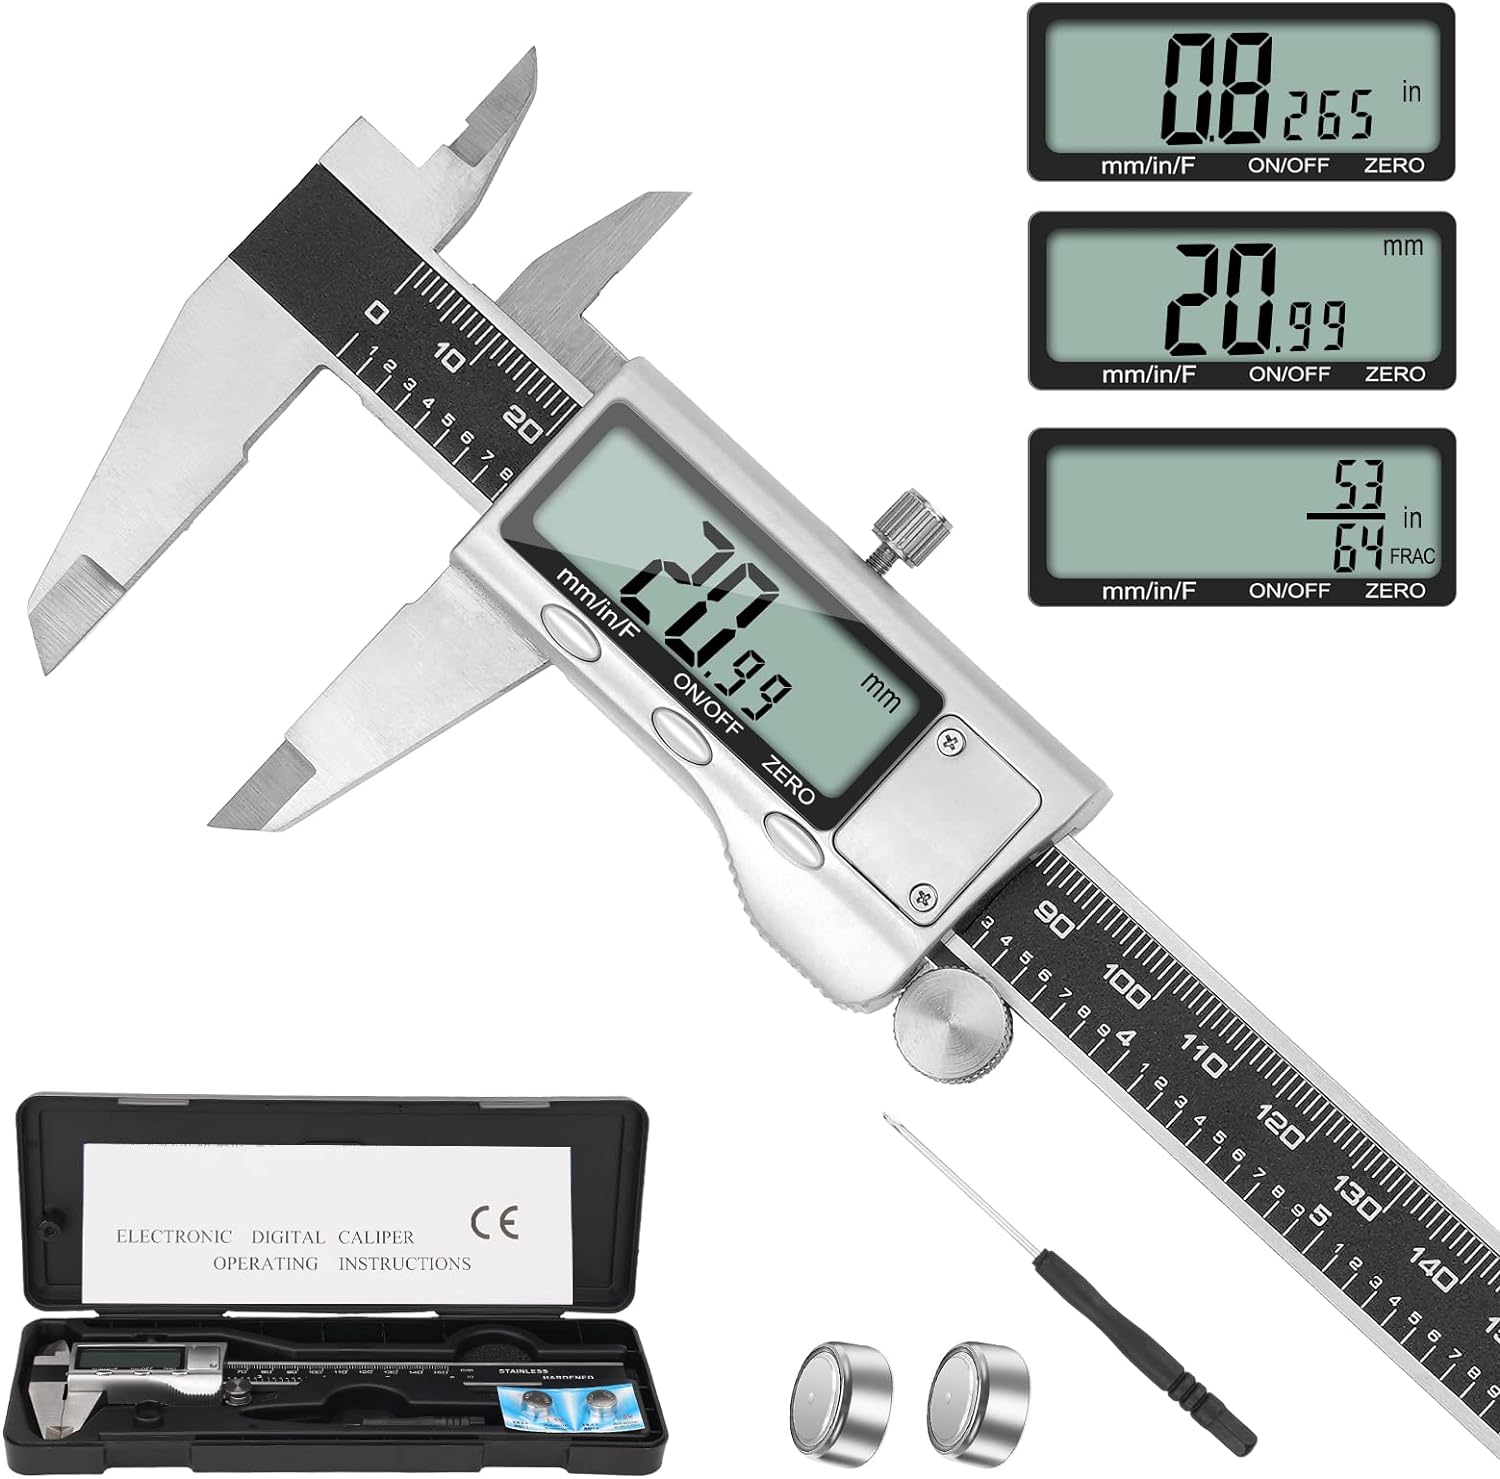 Snag Your Discount! Digital Caliper Measuring Tool - Save 20% Now!